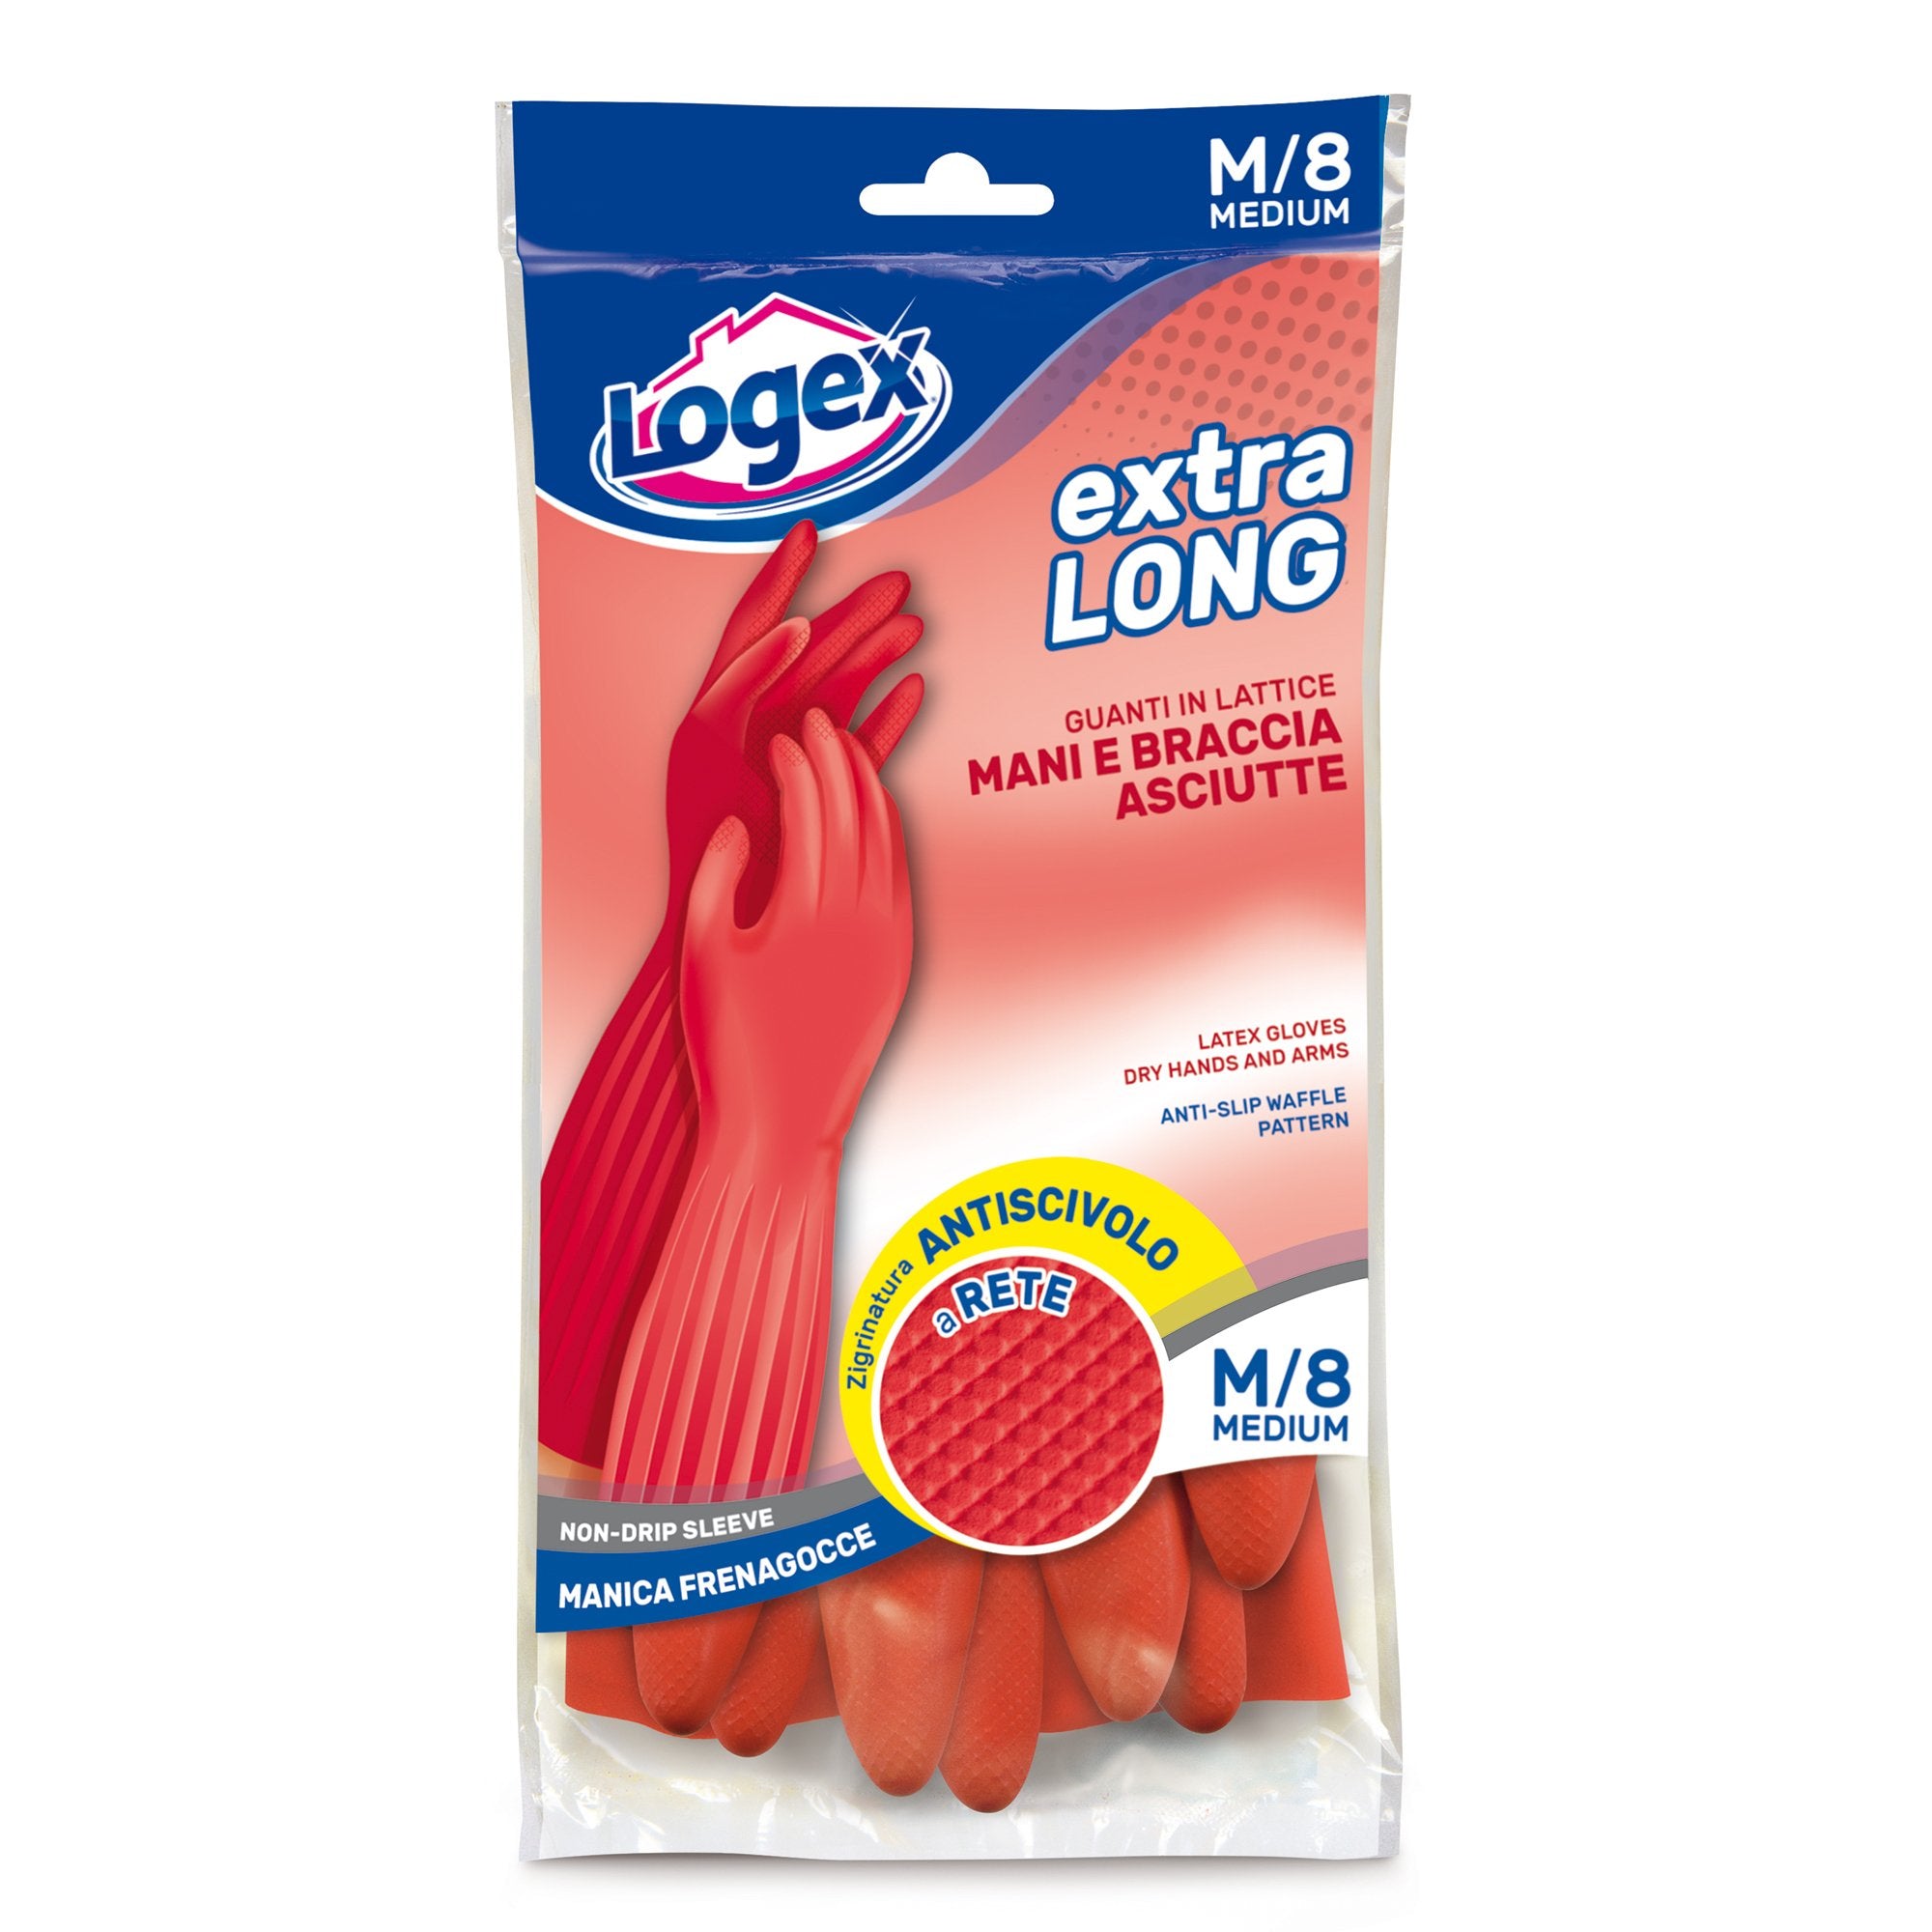 logex-professional-guanti-lattice-extralong-tg-m-rosso